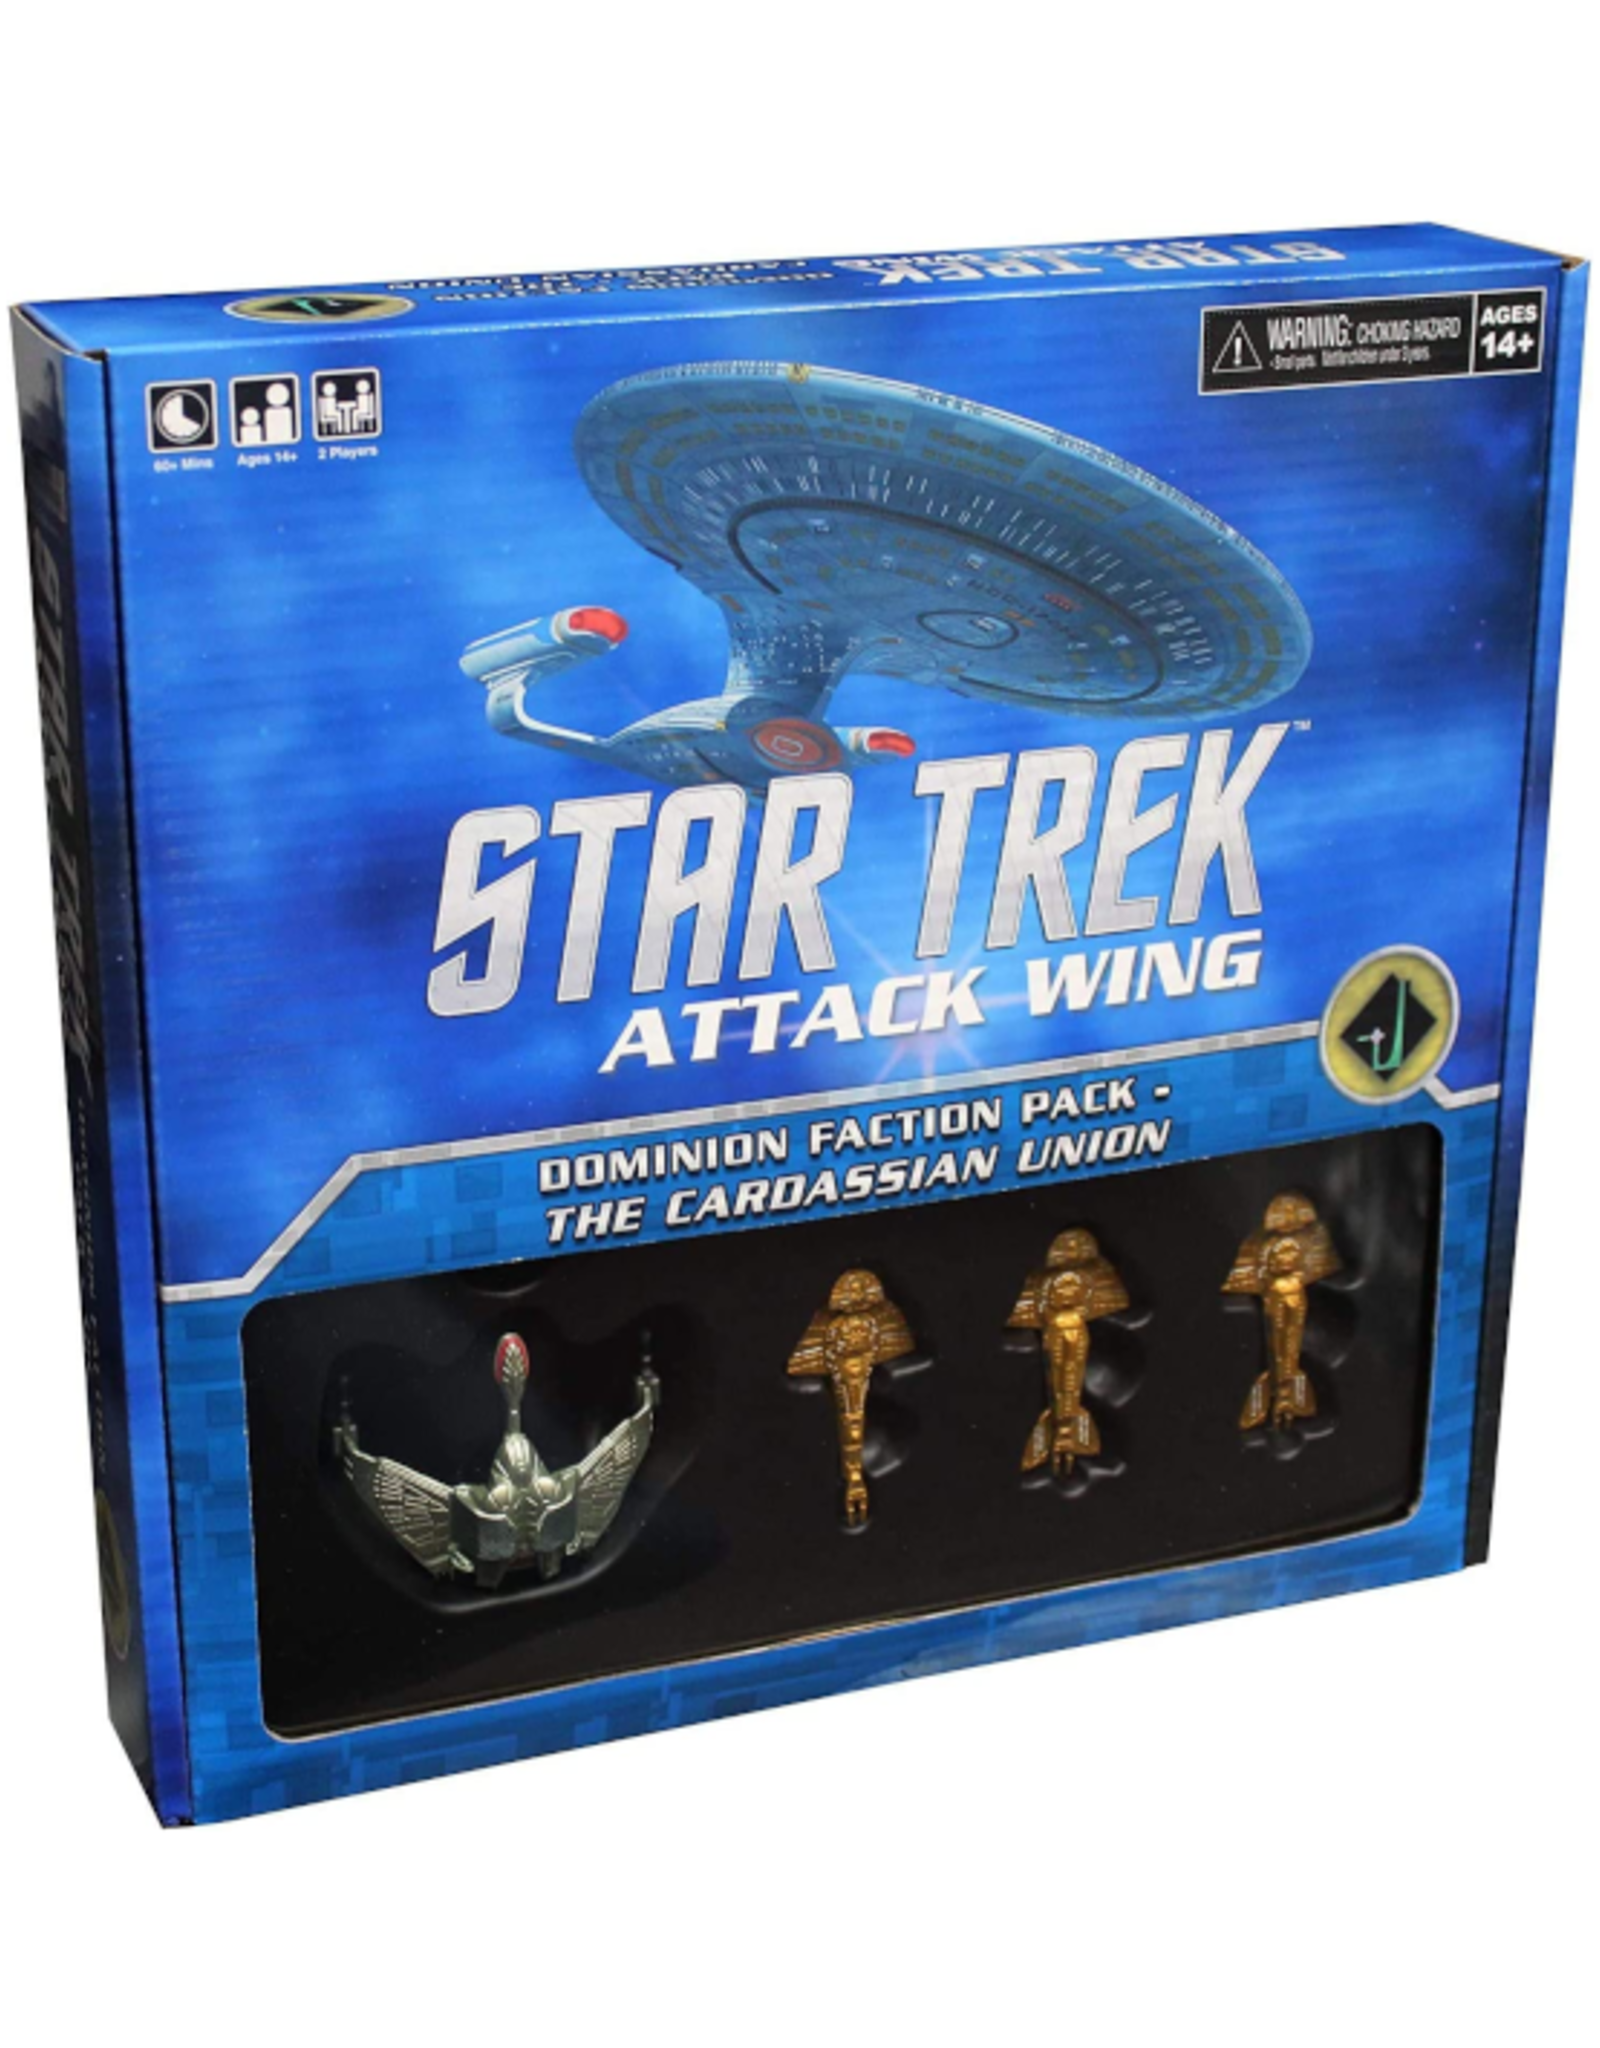 WizKids - Star Trek: Attack Wing - Dominion Faction Pack: Cardassian Union